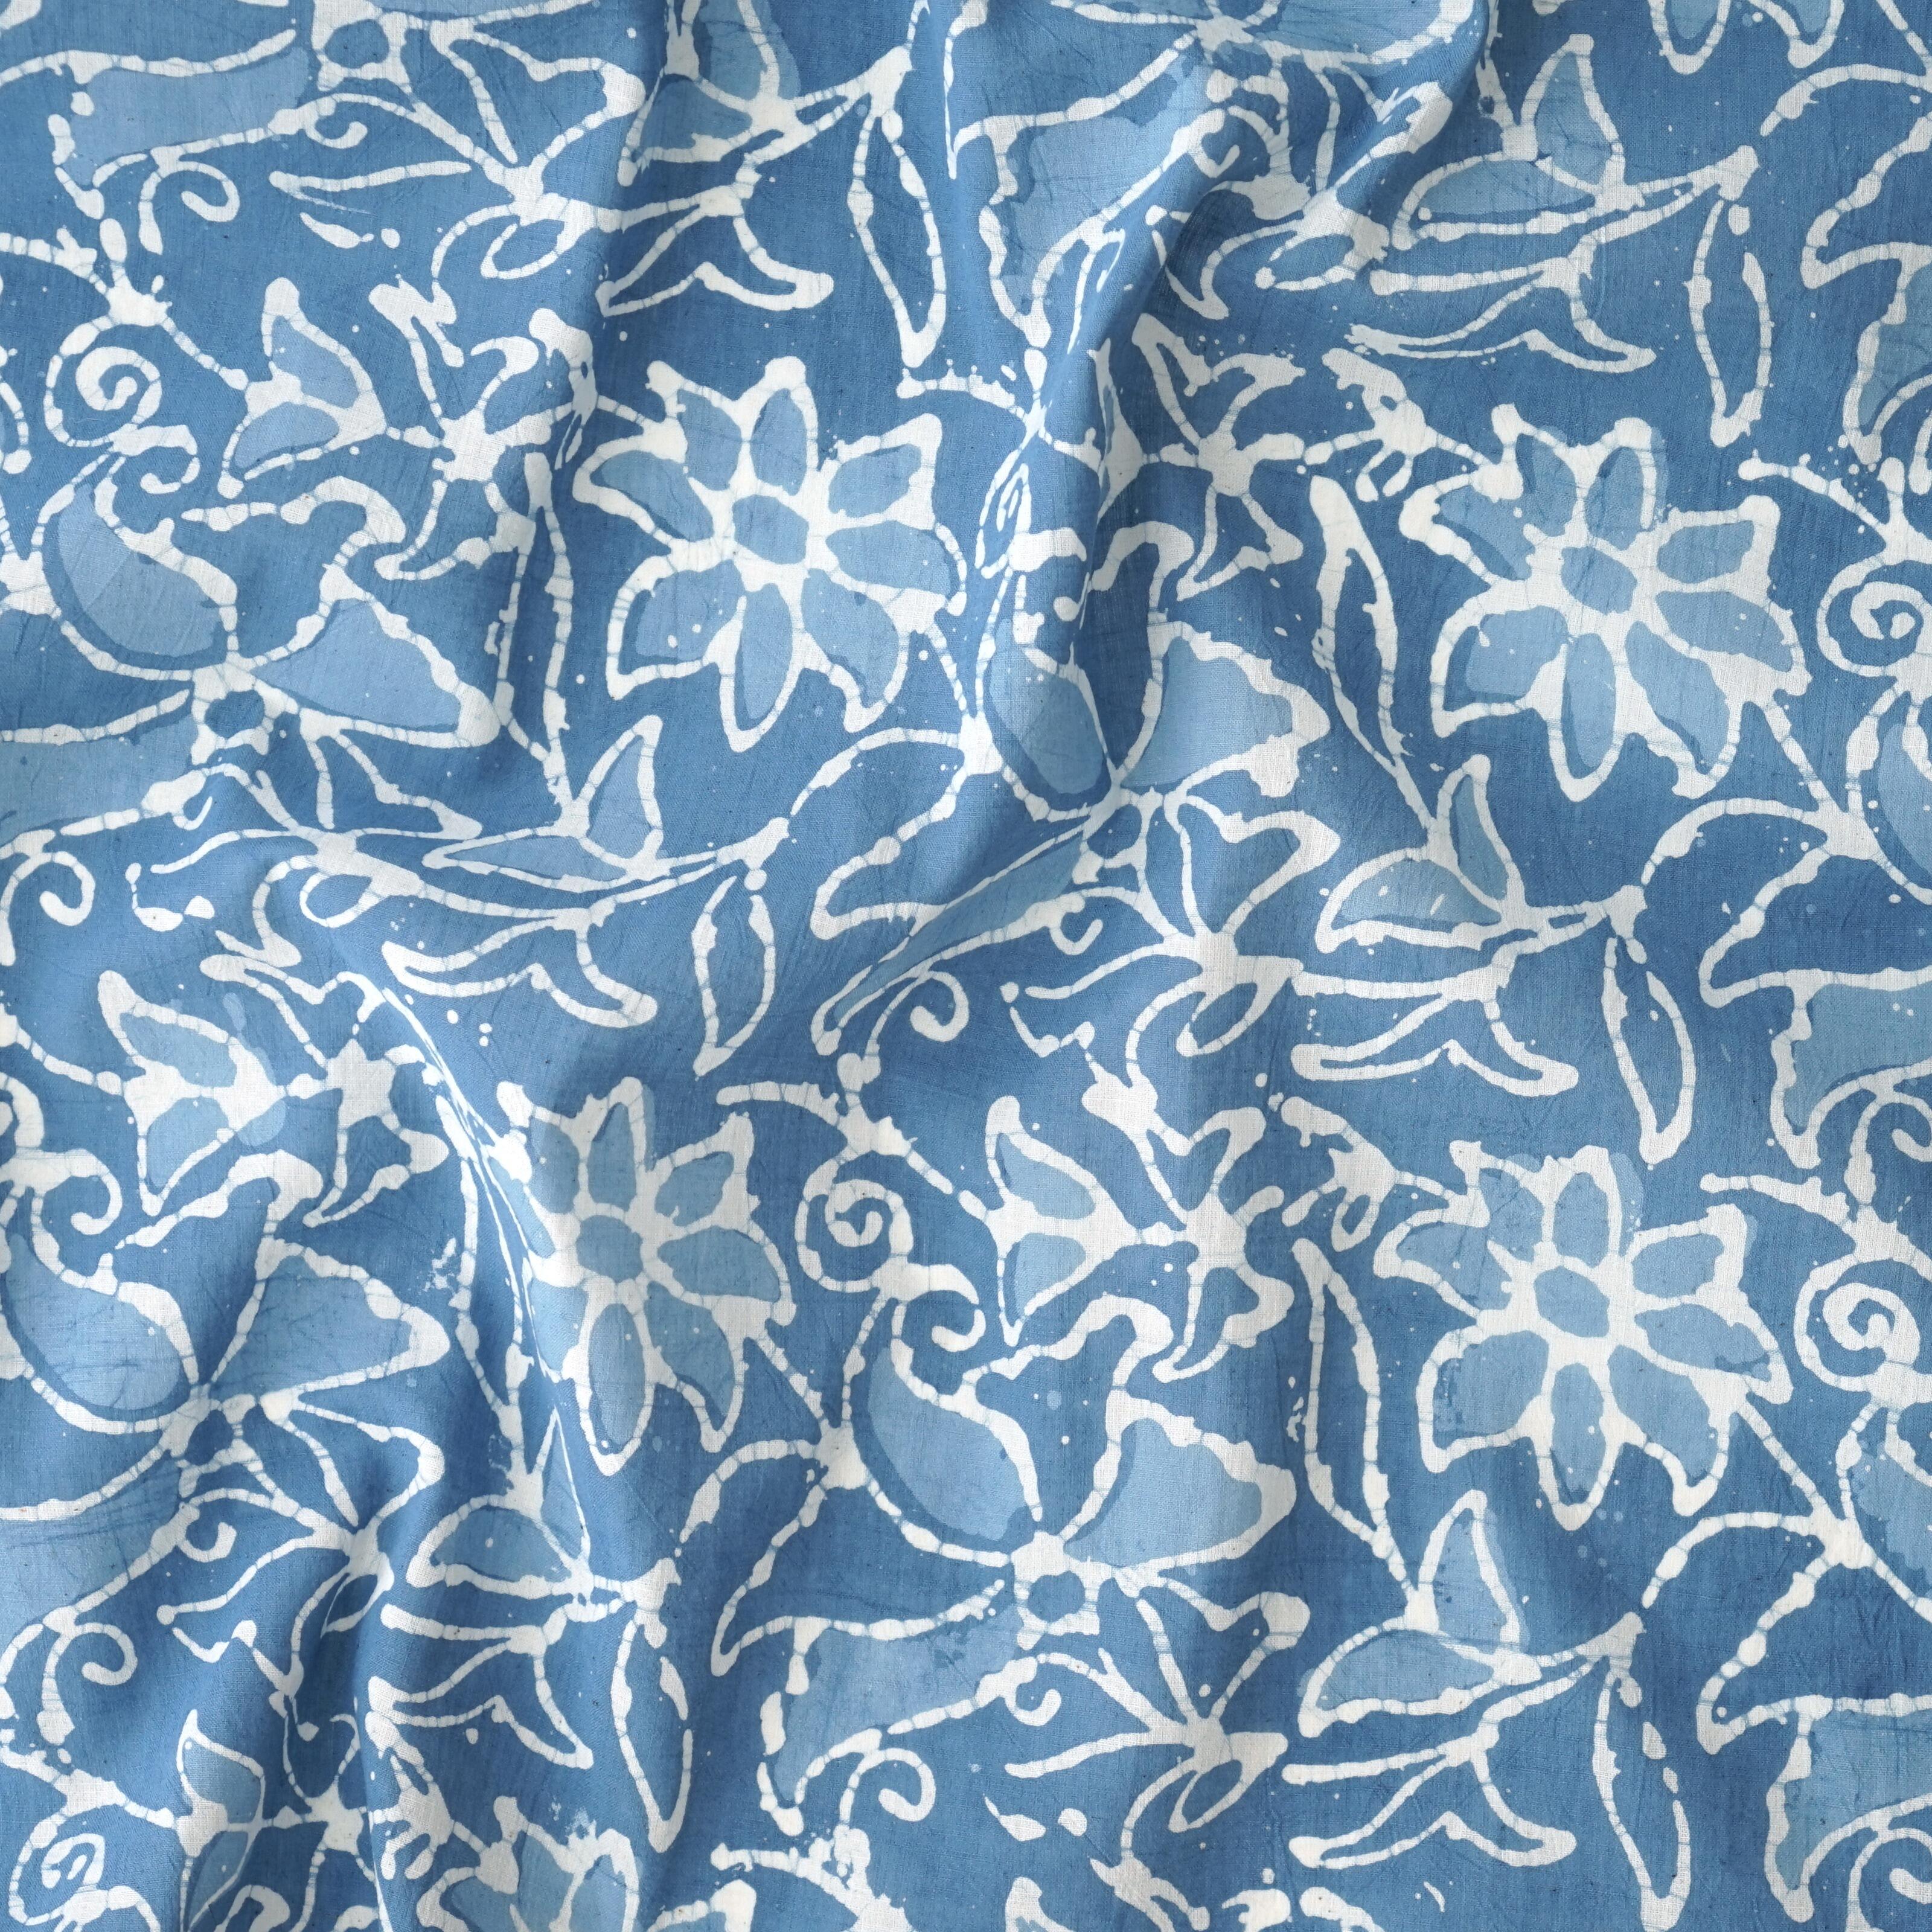 100% Block-Printed Batik Cotton Fabric From India - Blooming Blue Motif - Contrast